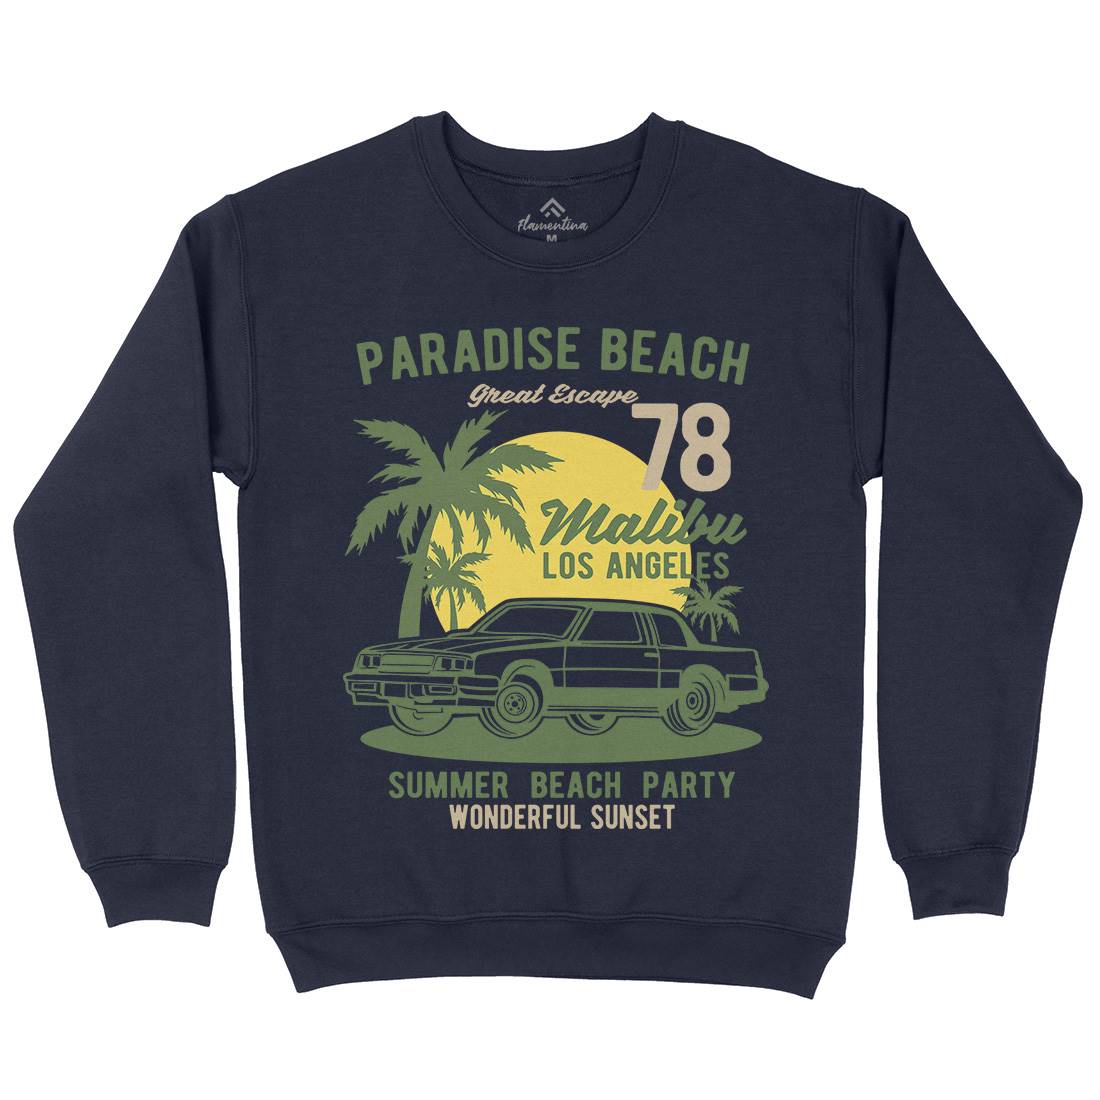 Paradise Beach Kids Crew Neck Sweatshirt Cars B244